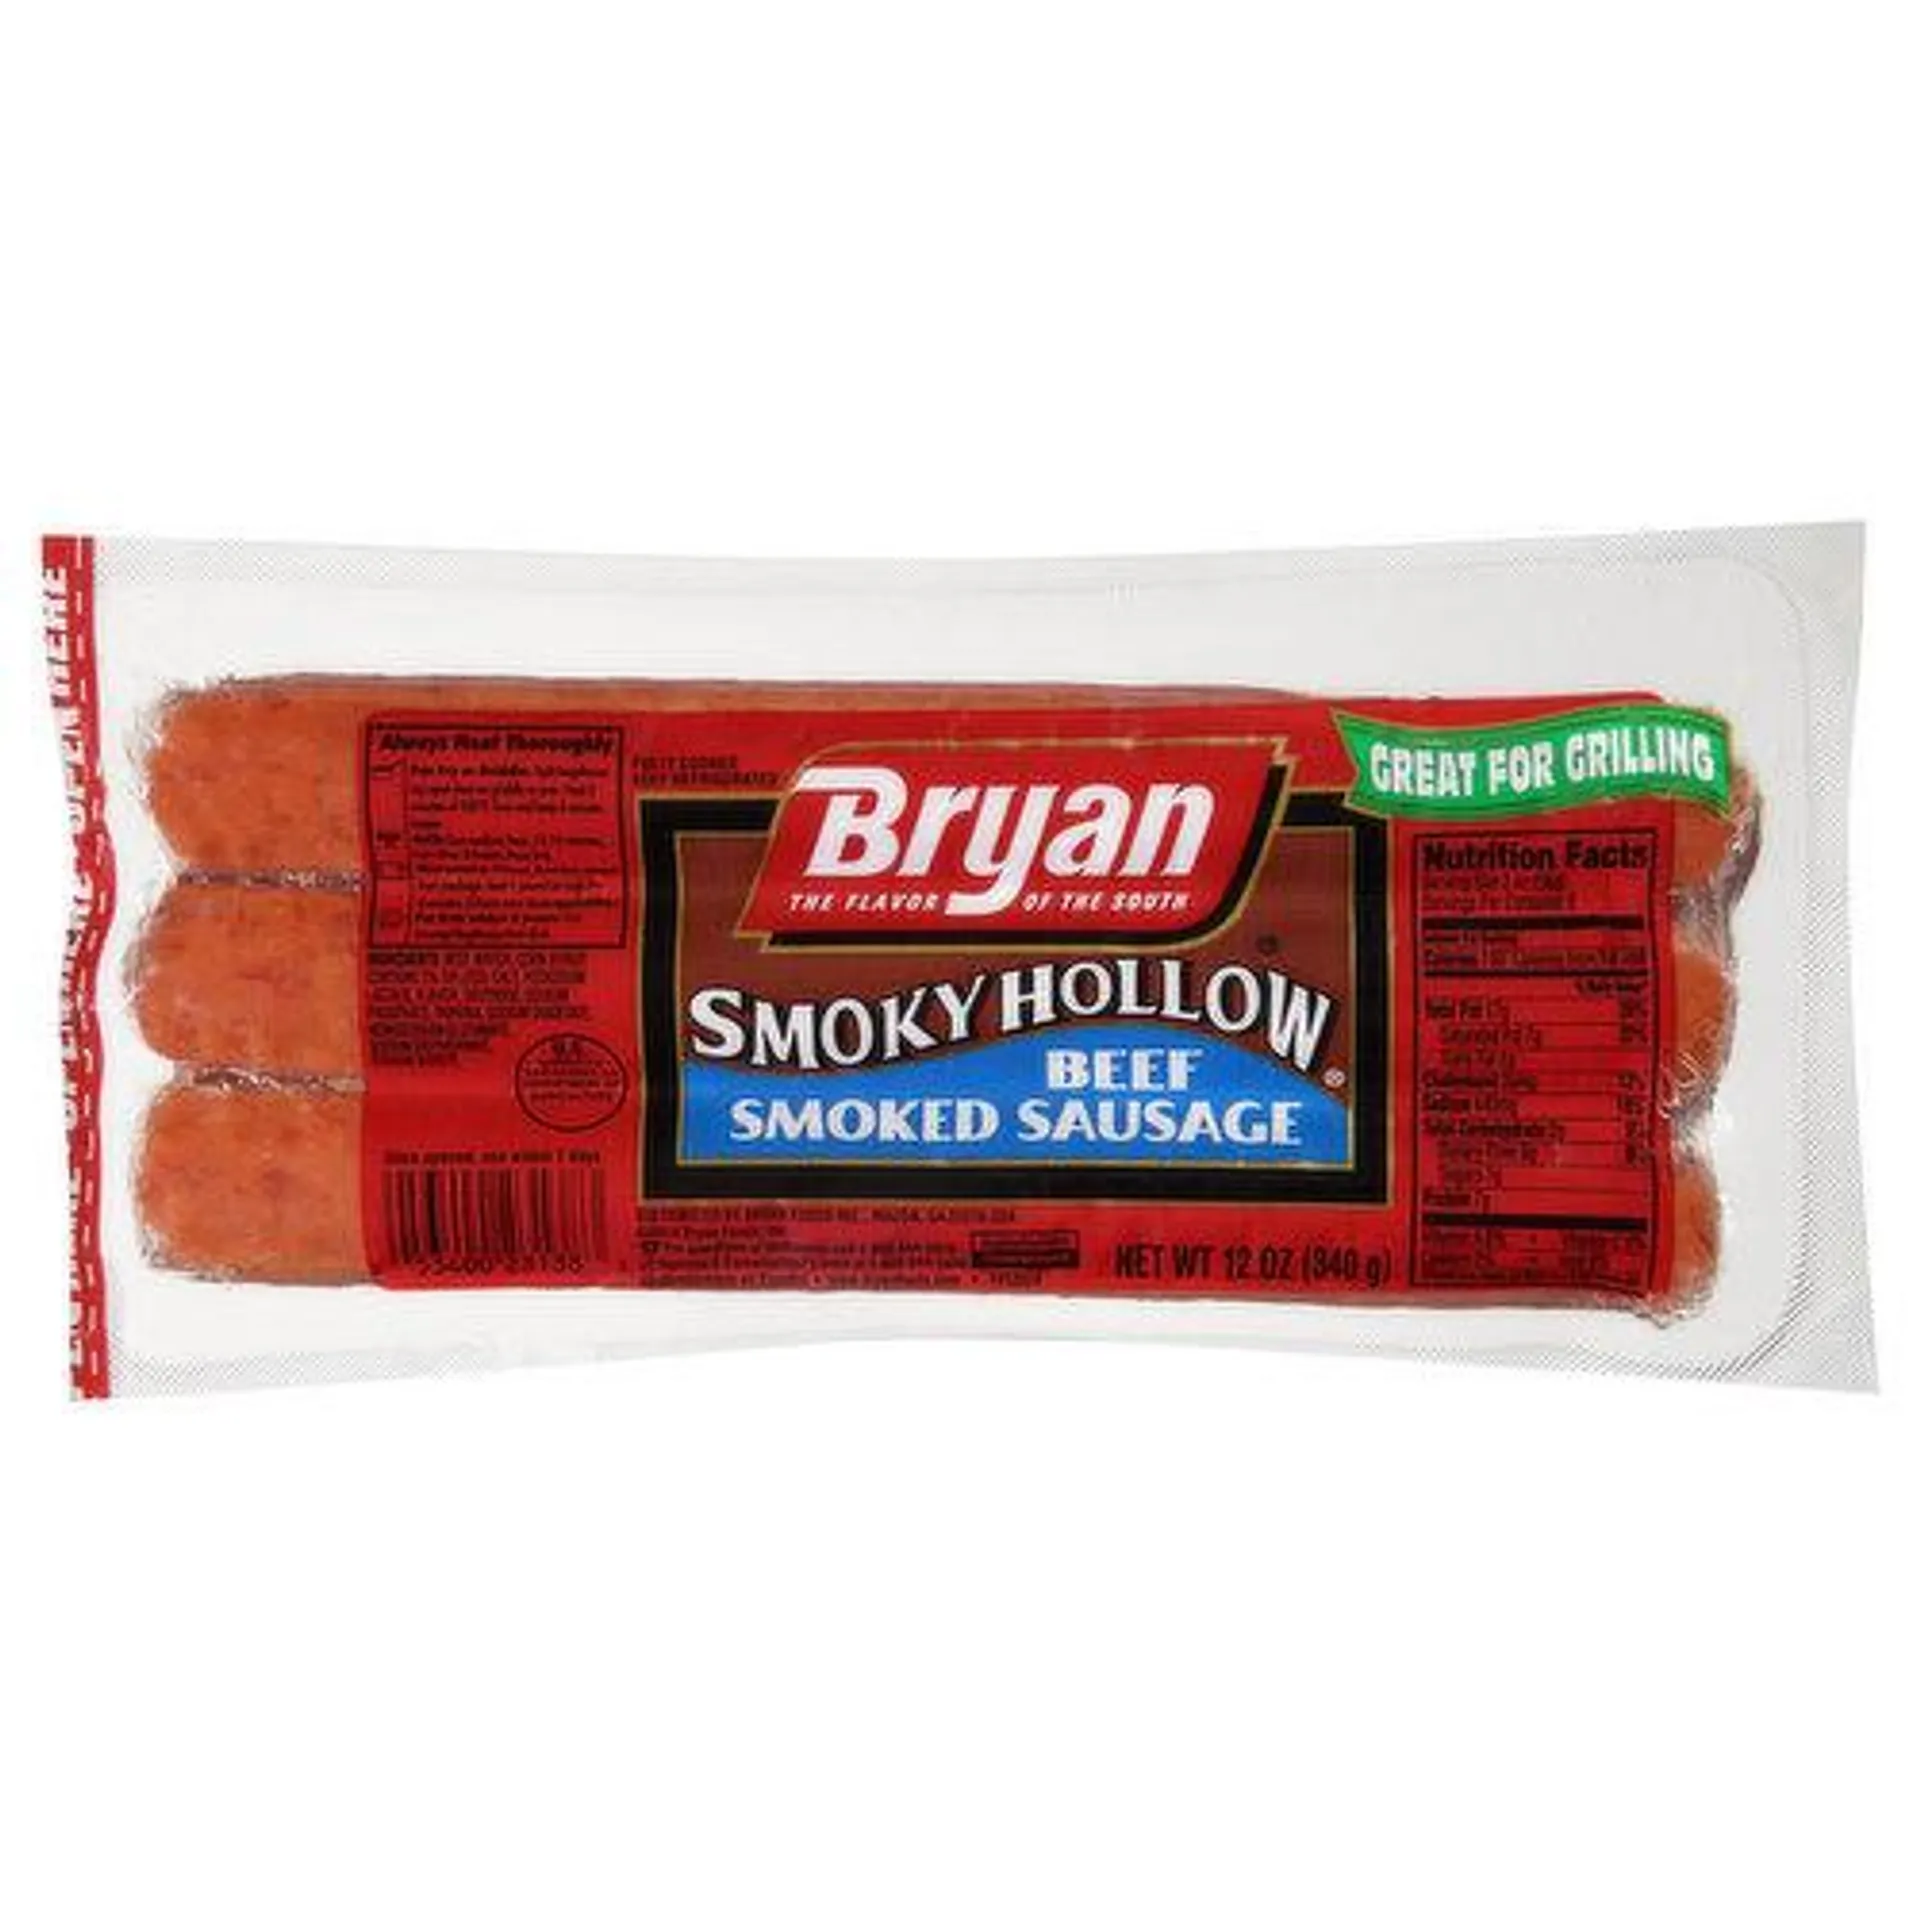 Bryan Smoked Sausage, Beef - 12 Ounce